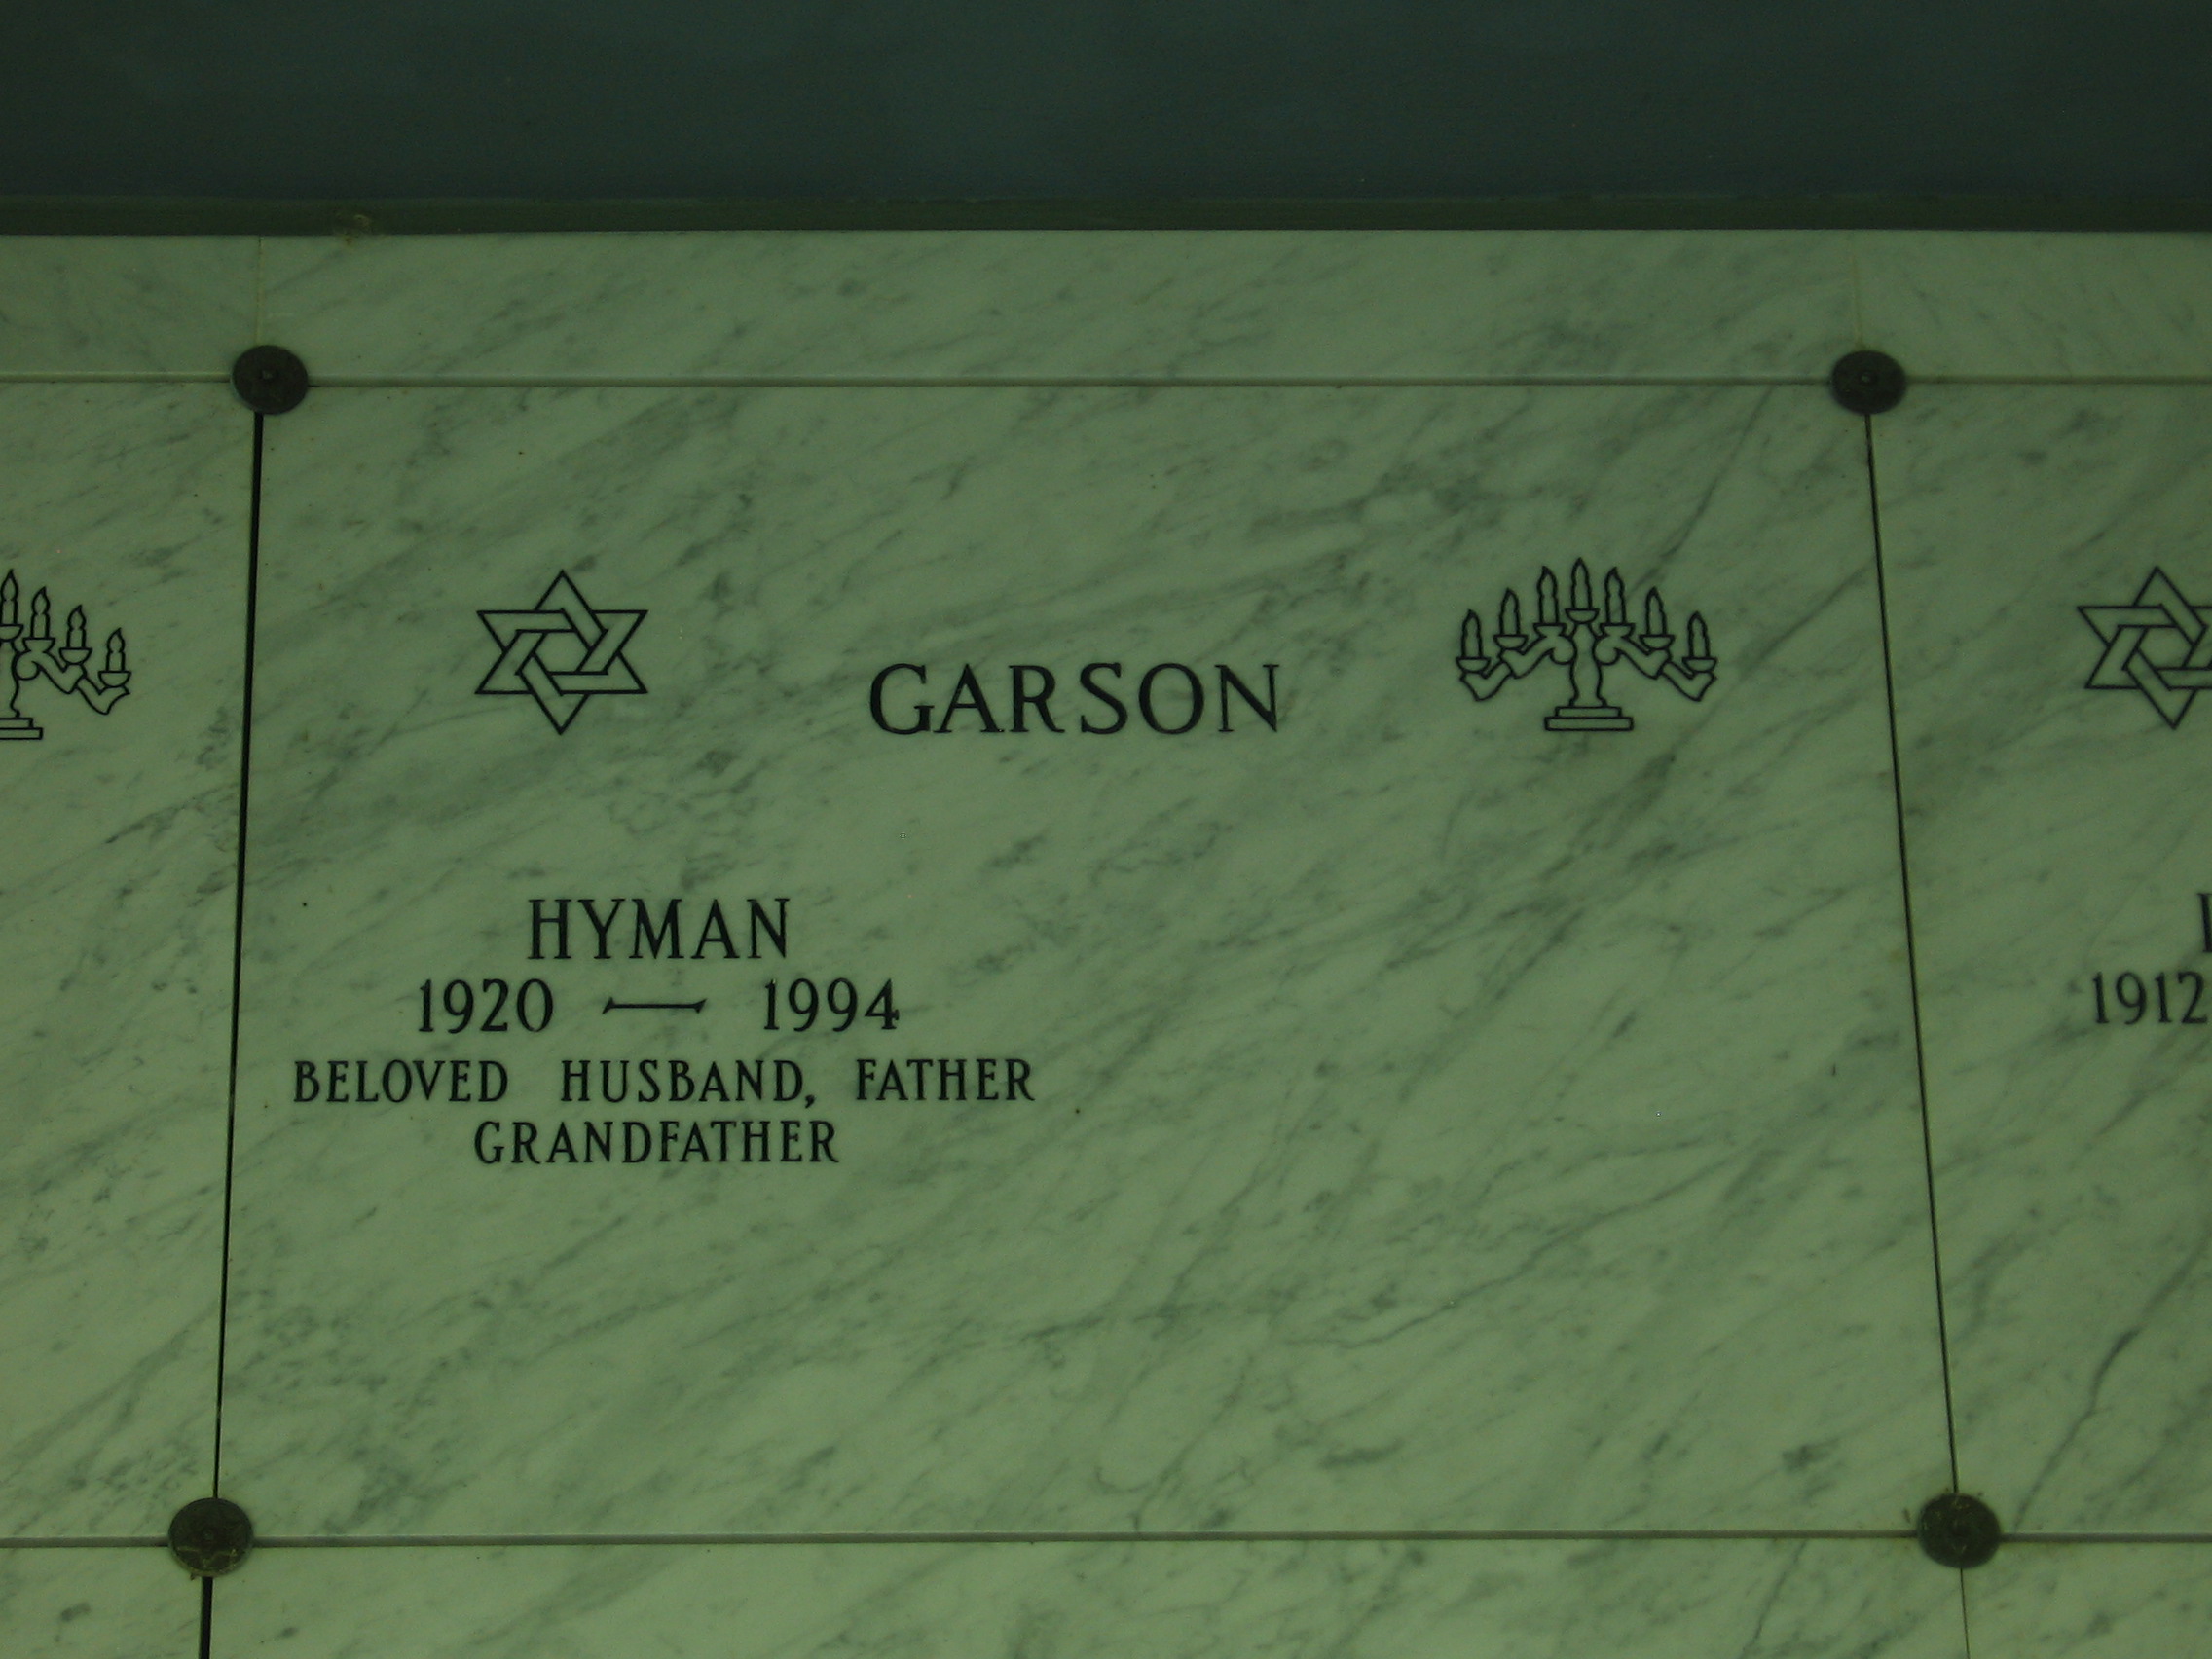 Hyman Garson